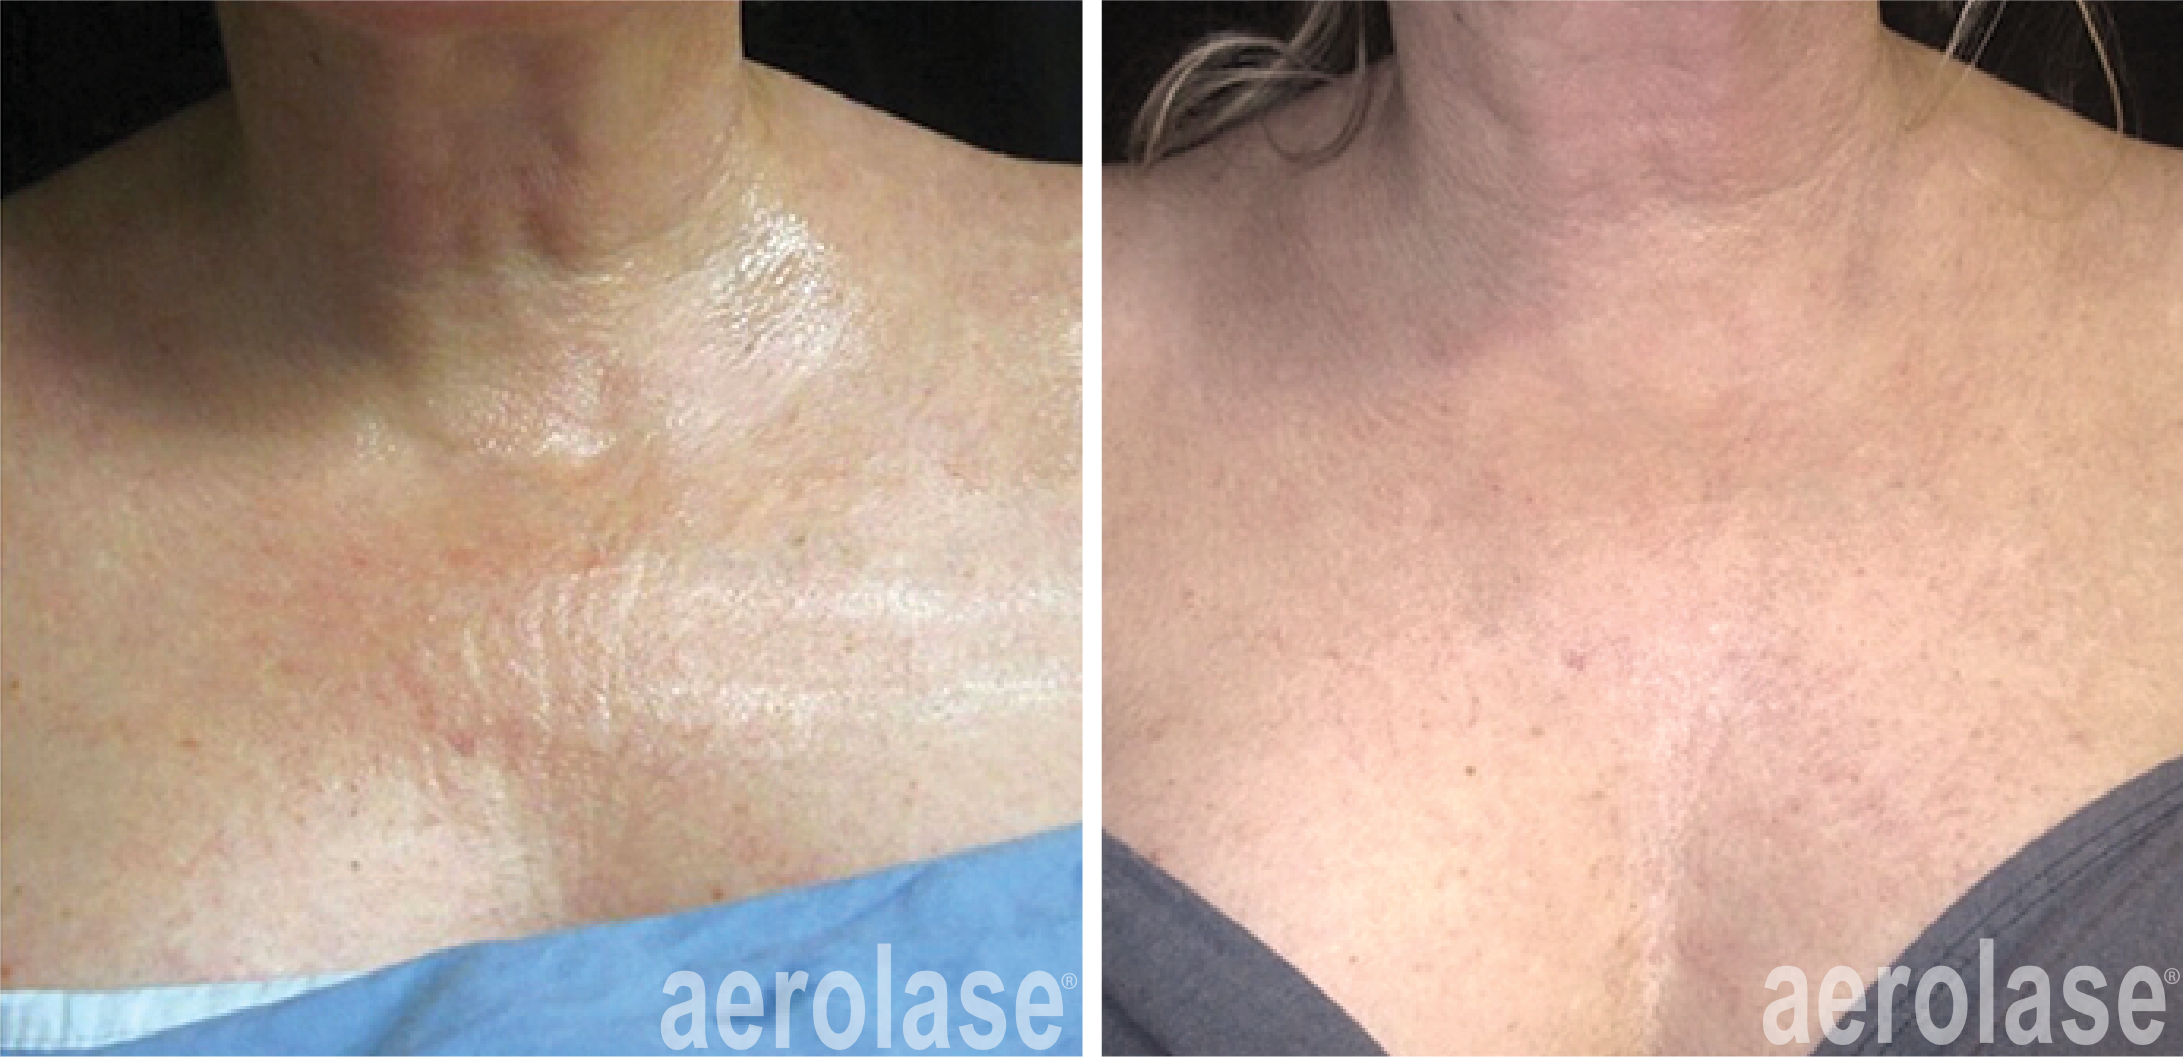 aerolase-neoskin-skin-rejuvenation-after-4-treatments-jason-emer.png